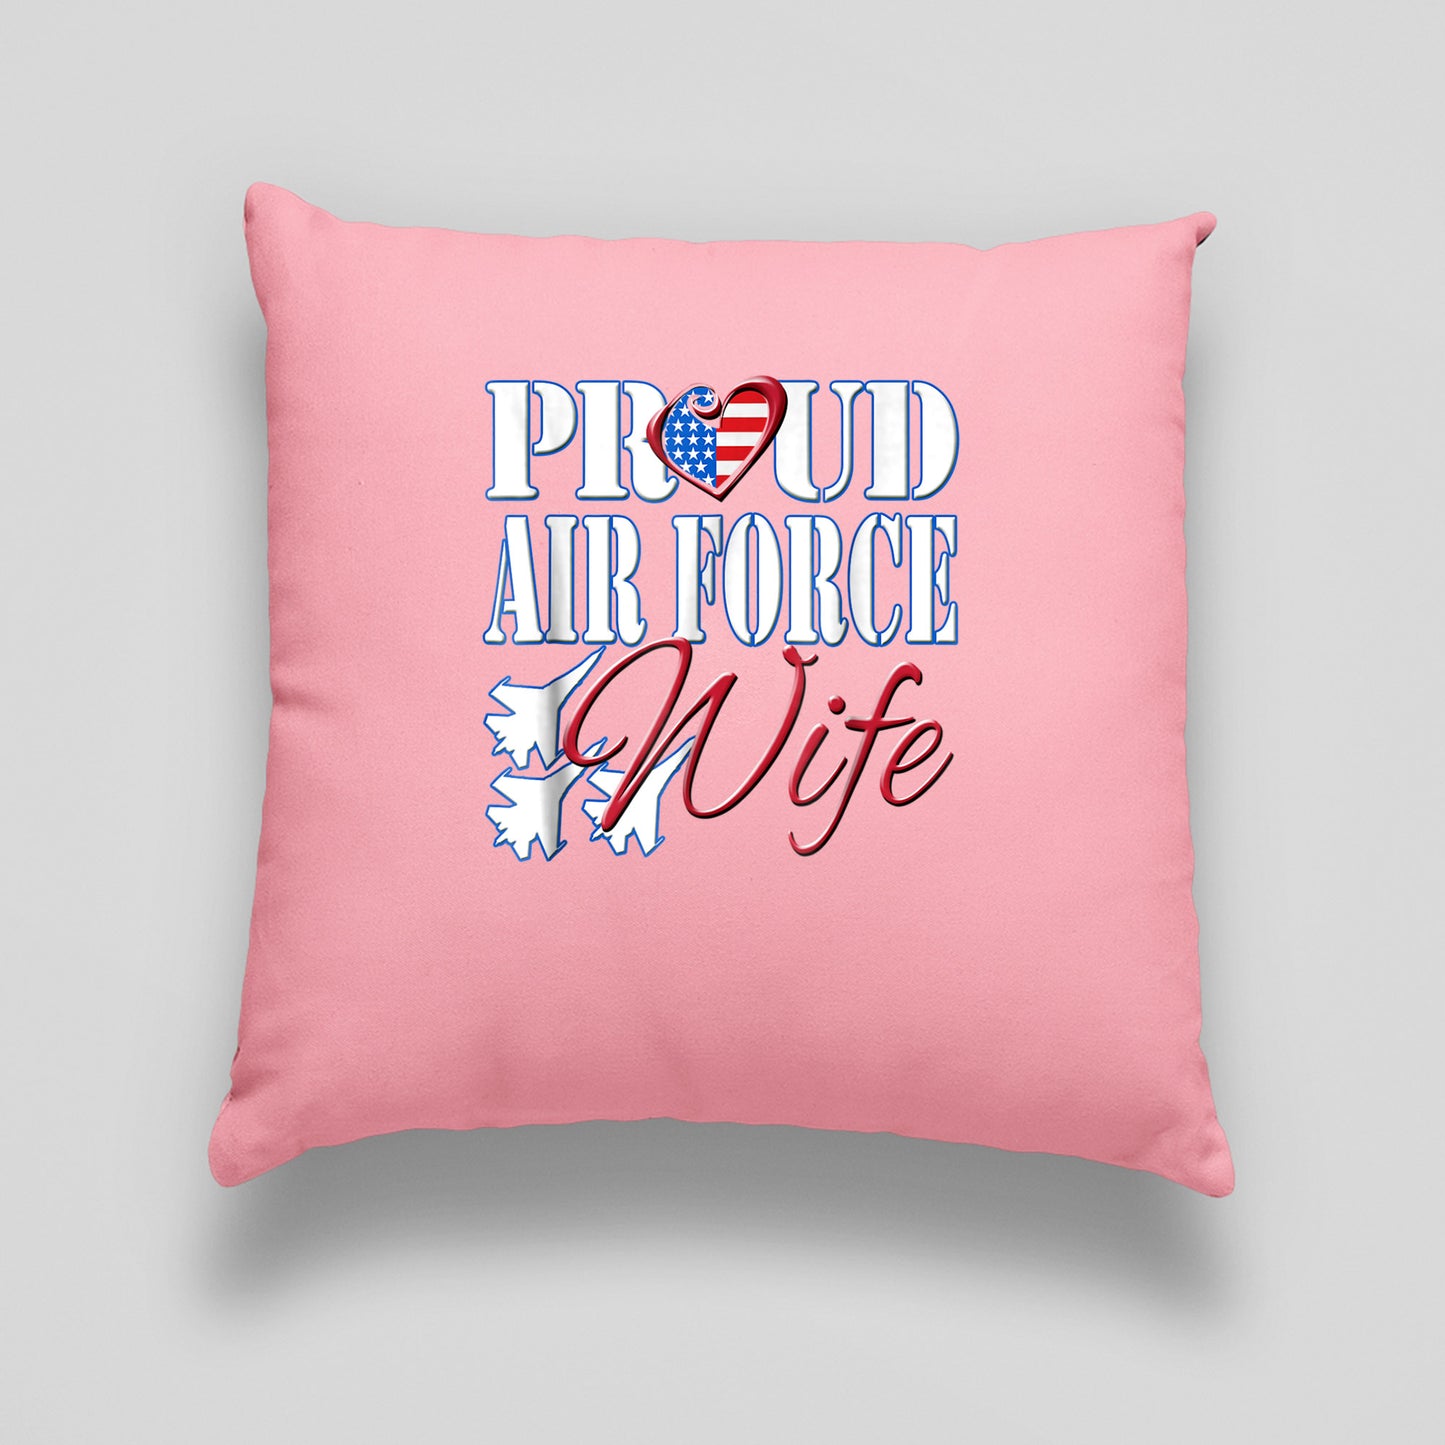 Memorial Day 2021, Air Force Memorial Print Linen Cushion, Pround Air Force Wife Pillow, For Grandma